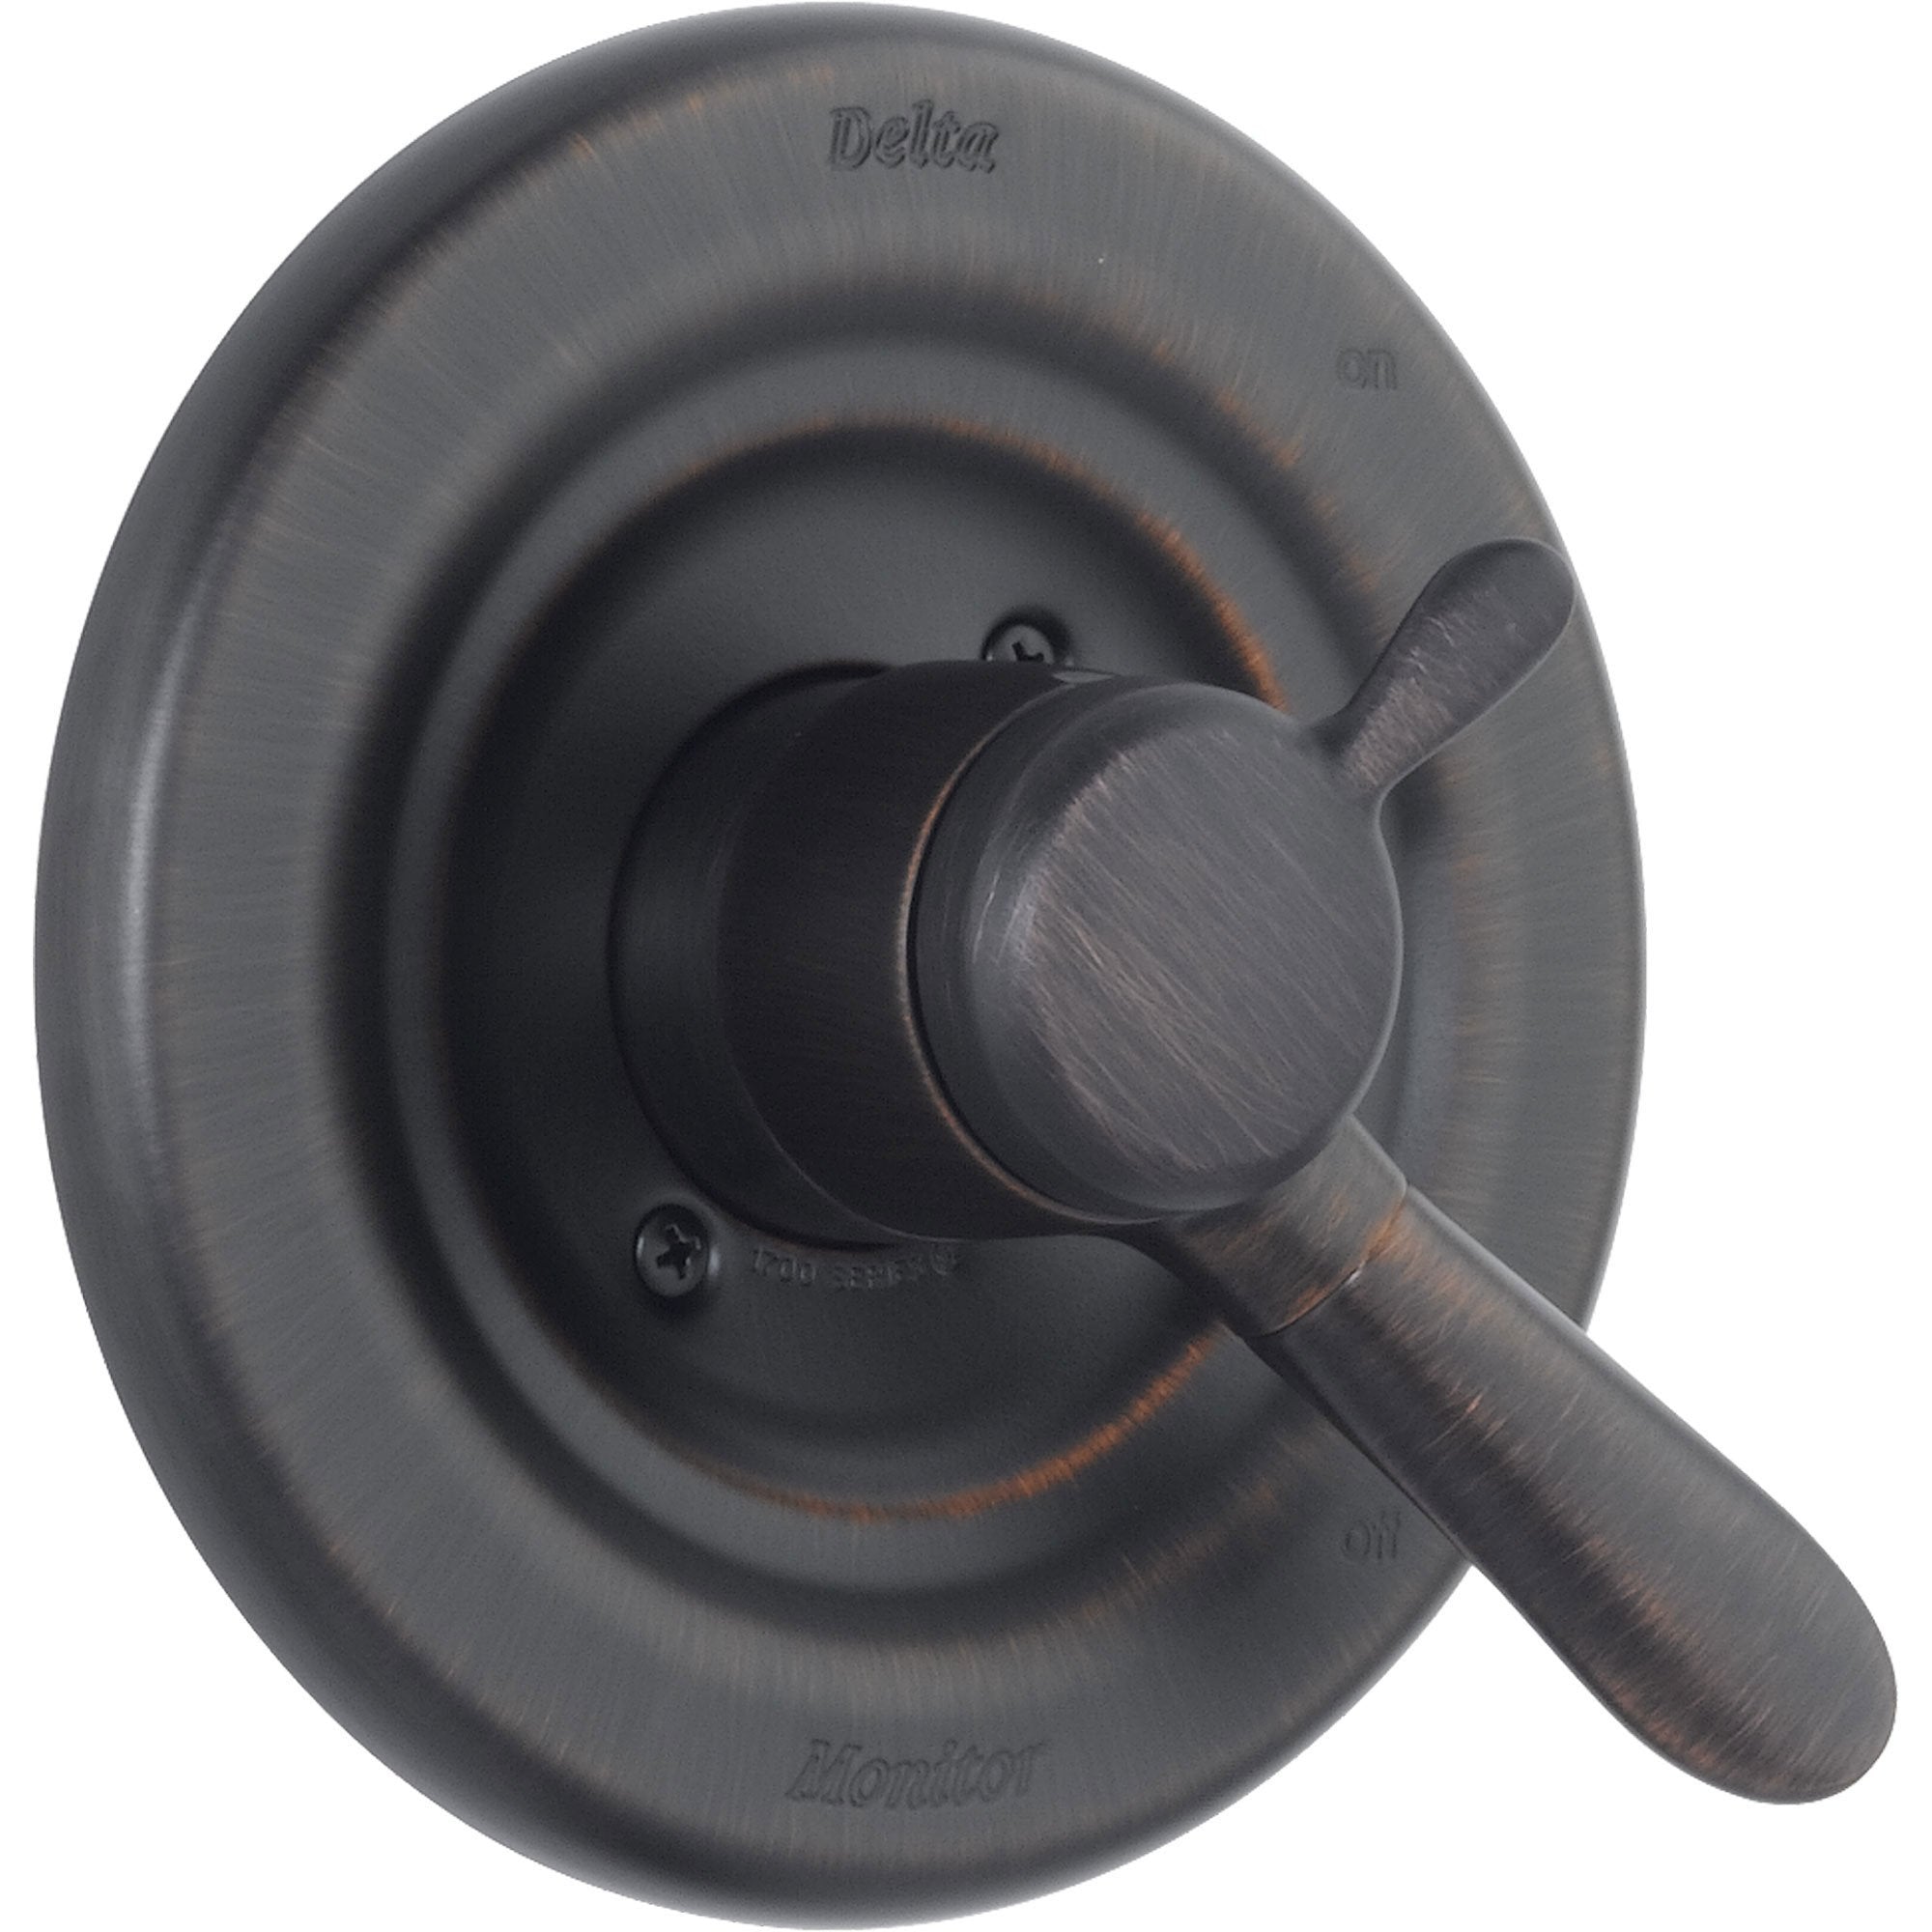 Delta Temperature & Volume Control Venetian Bronze Shower Faucet w/ Valve D114V